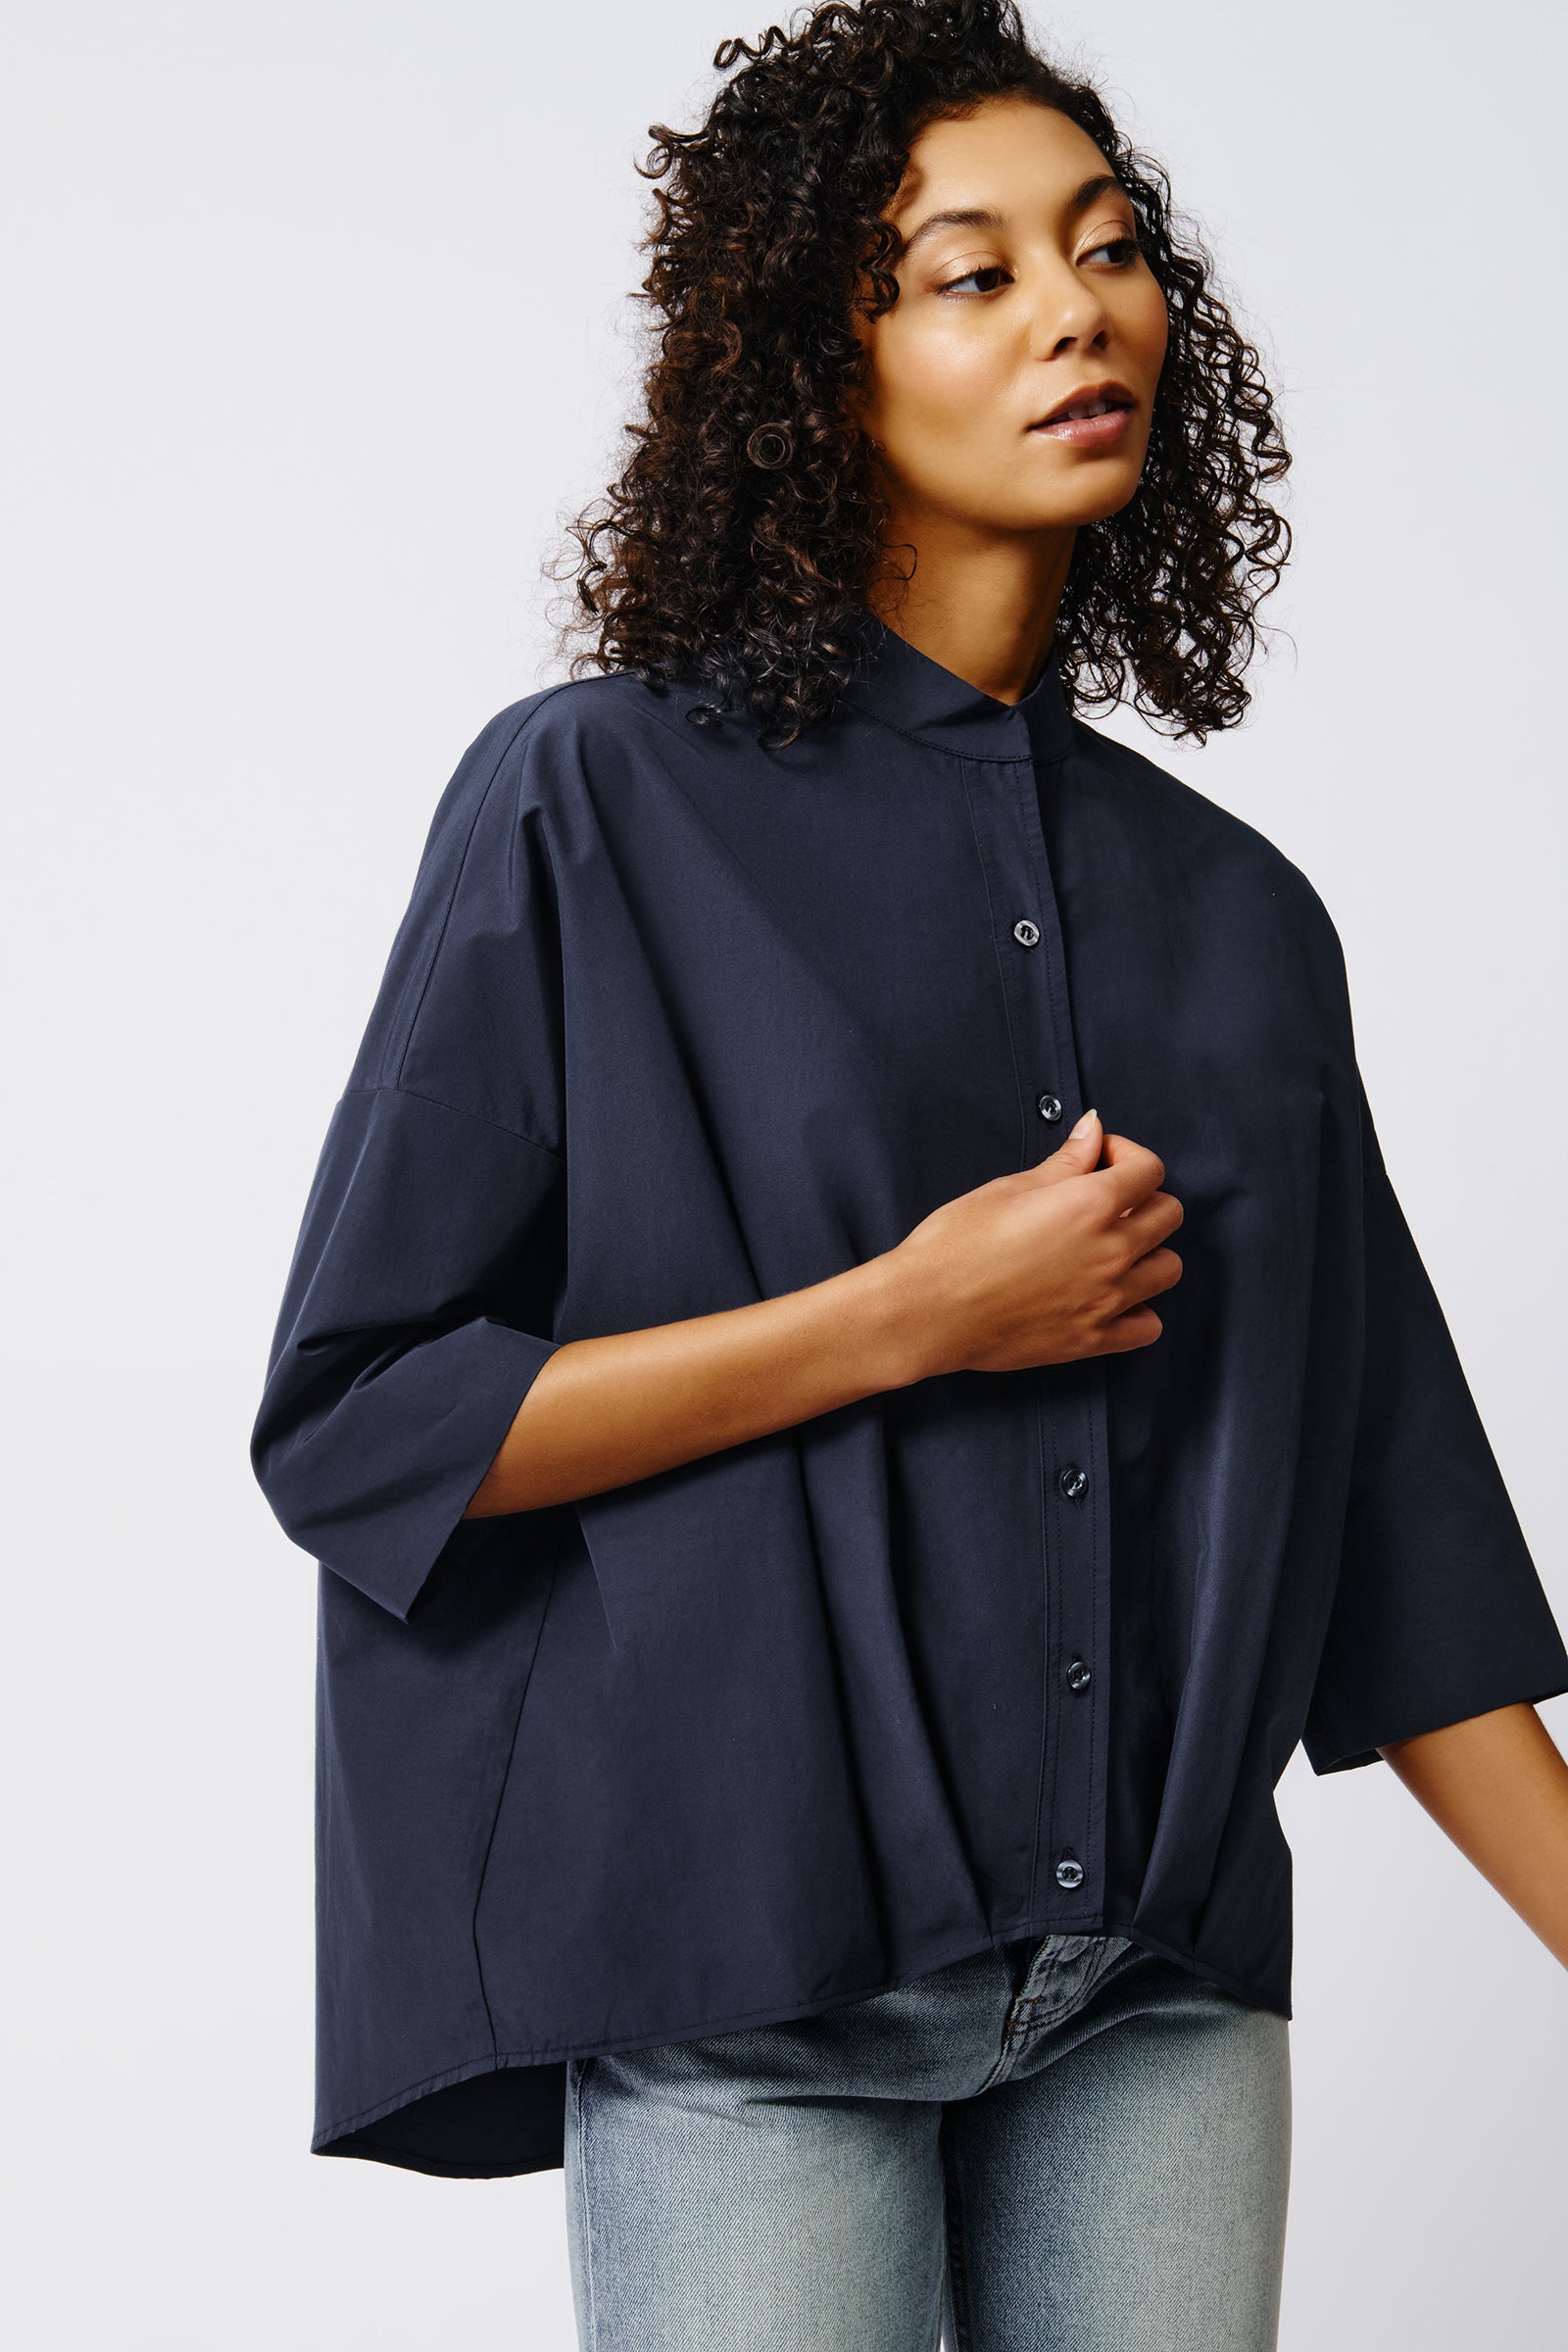 Pleat Hem Kimono in Navy Broadcloth Made in Italian Cotton Nylon – KAL ...